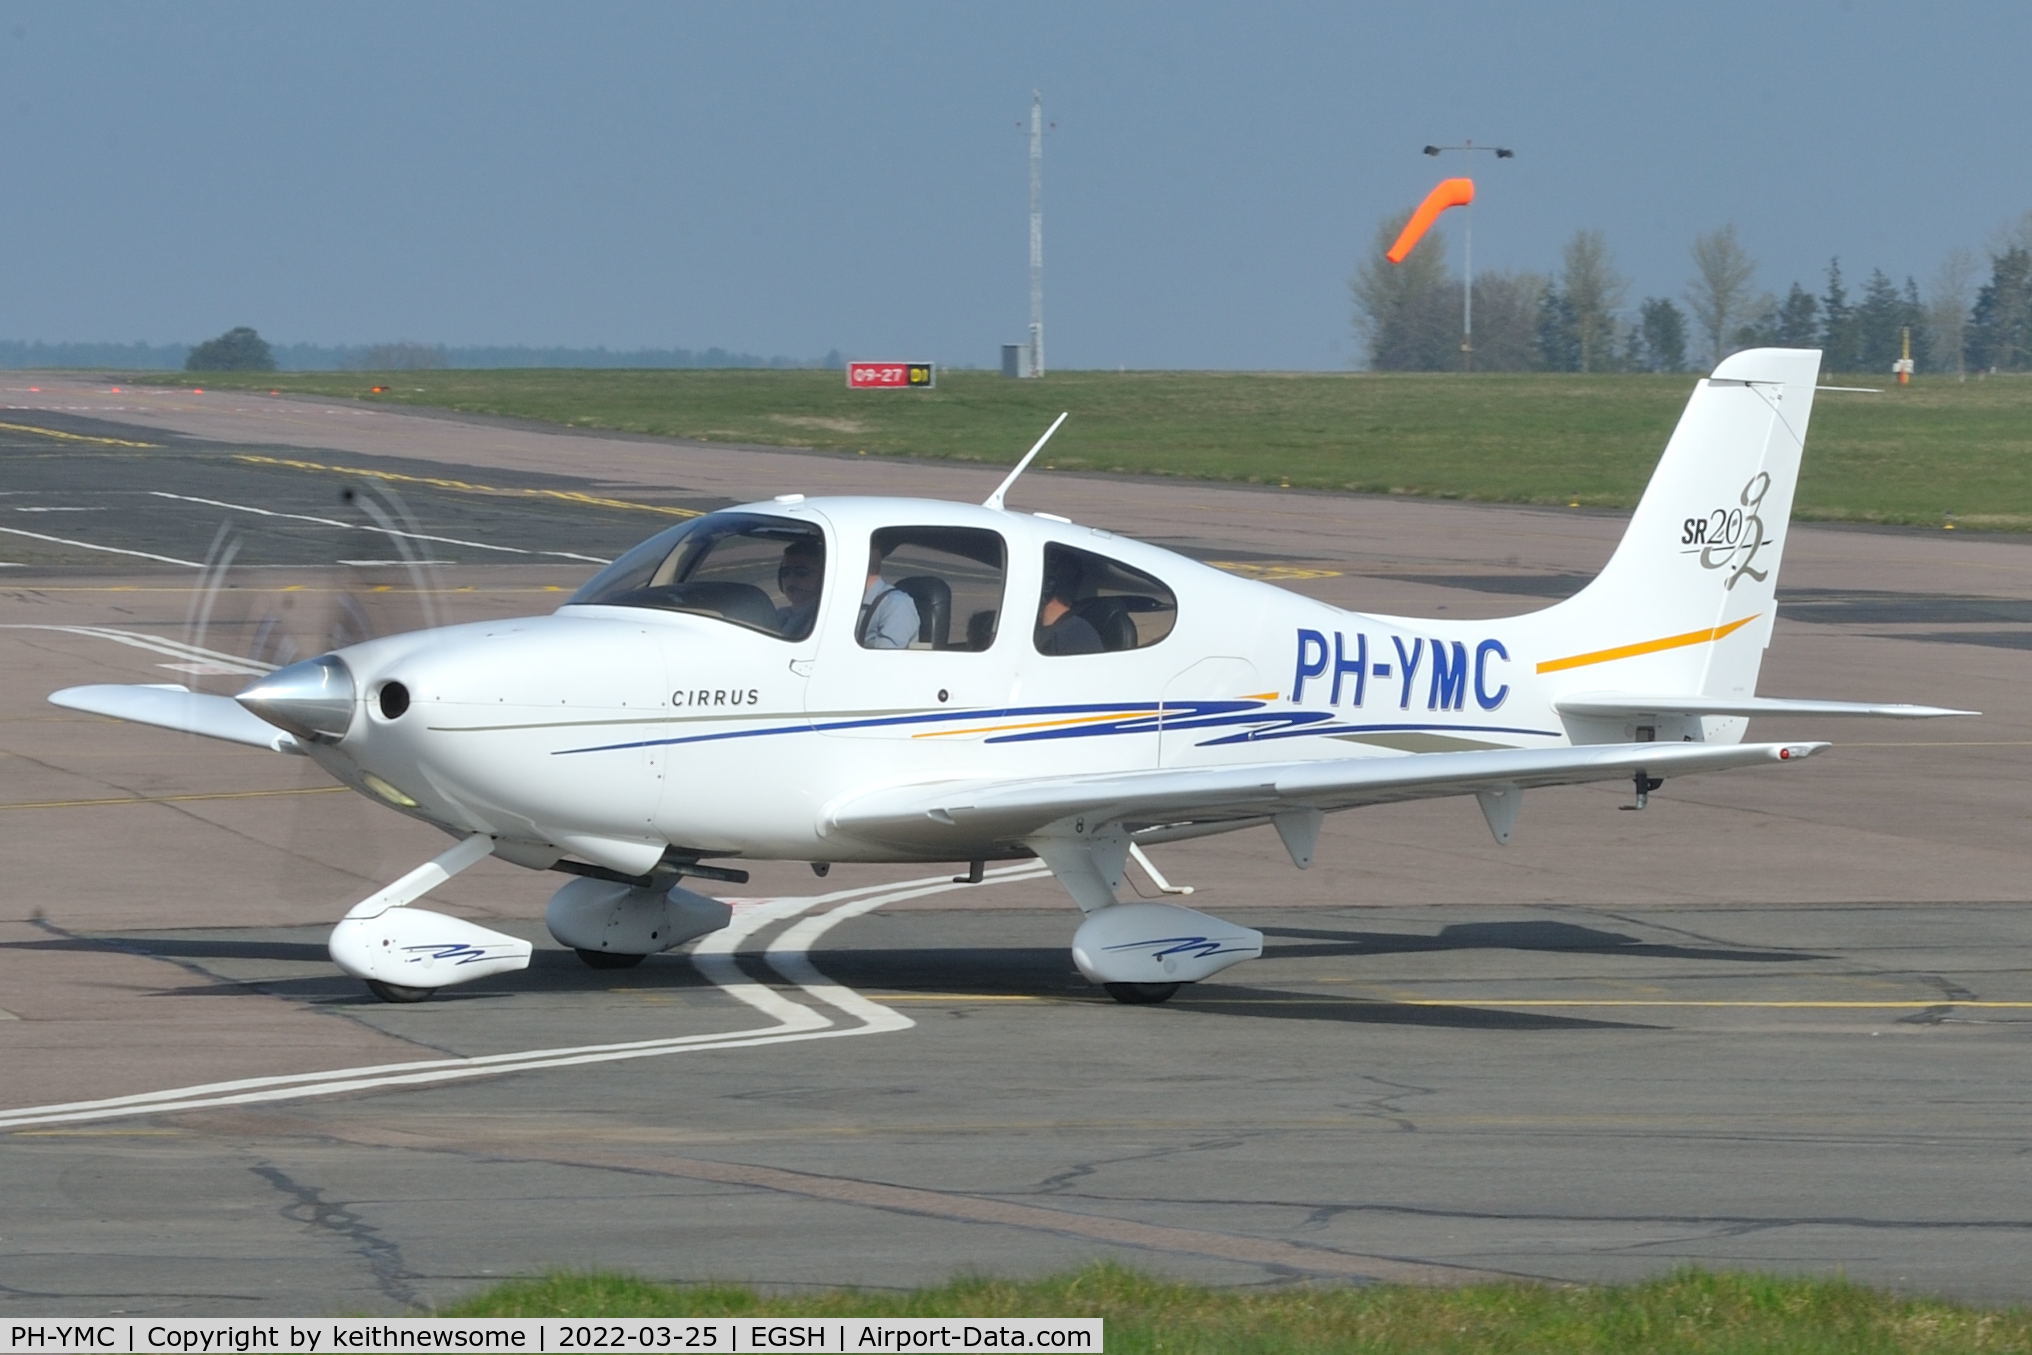 PH-YMC, 2005 Cirrus SR20 G2 C/N 1539, Arriving at Norwich from Rotterdam.